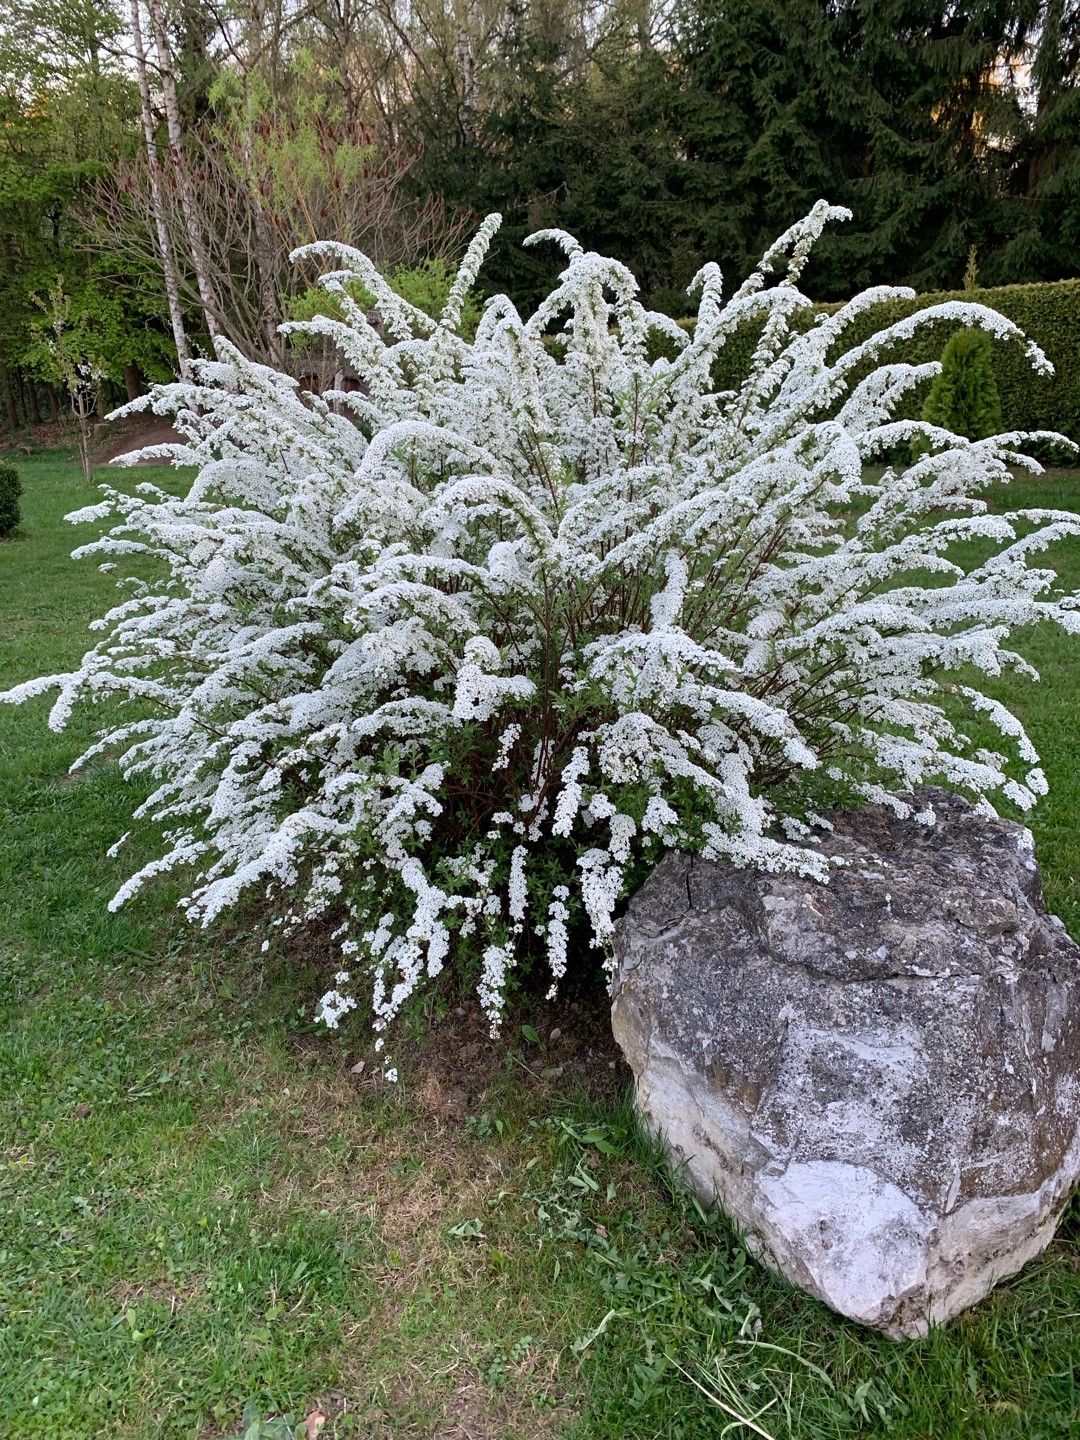 Image of Tor spirea plant in a vase